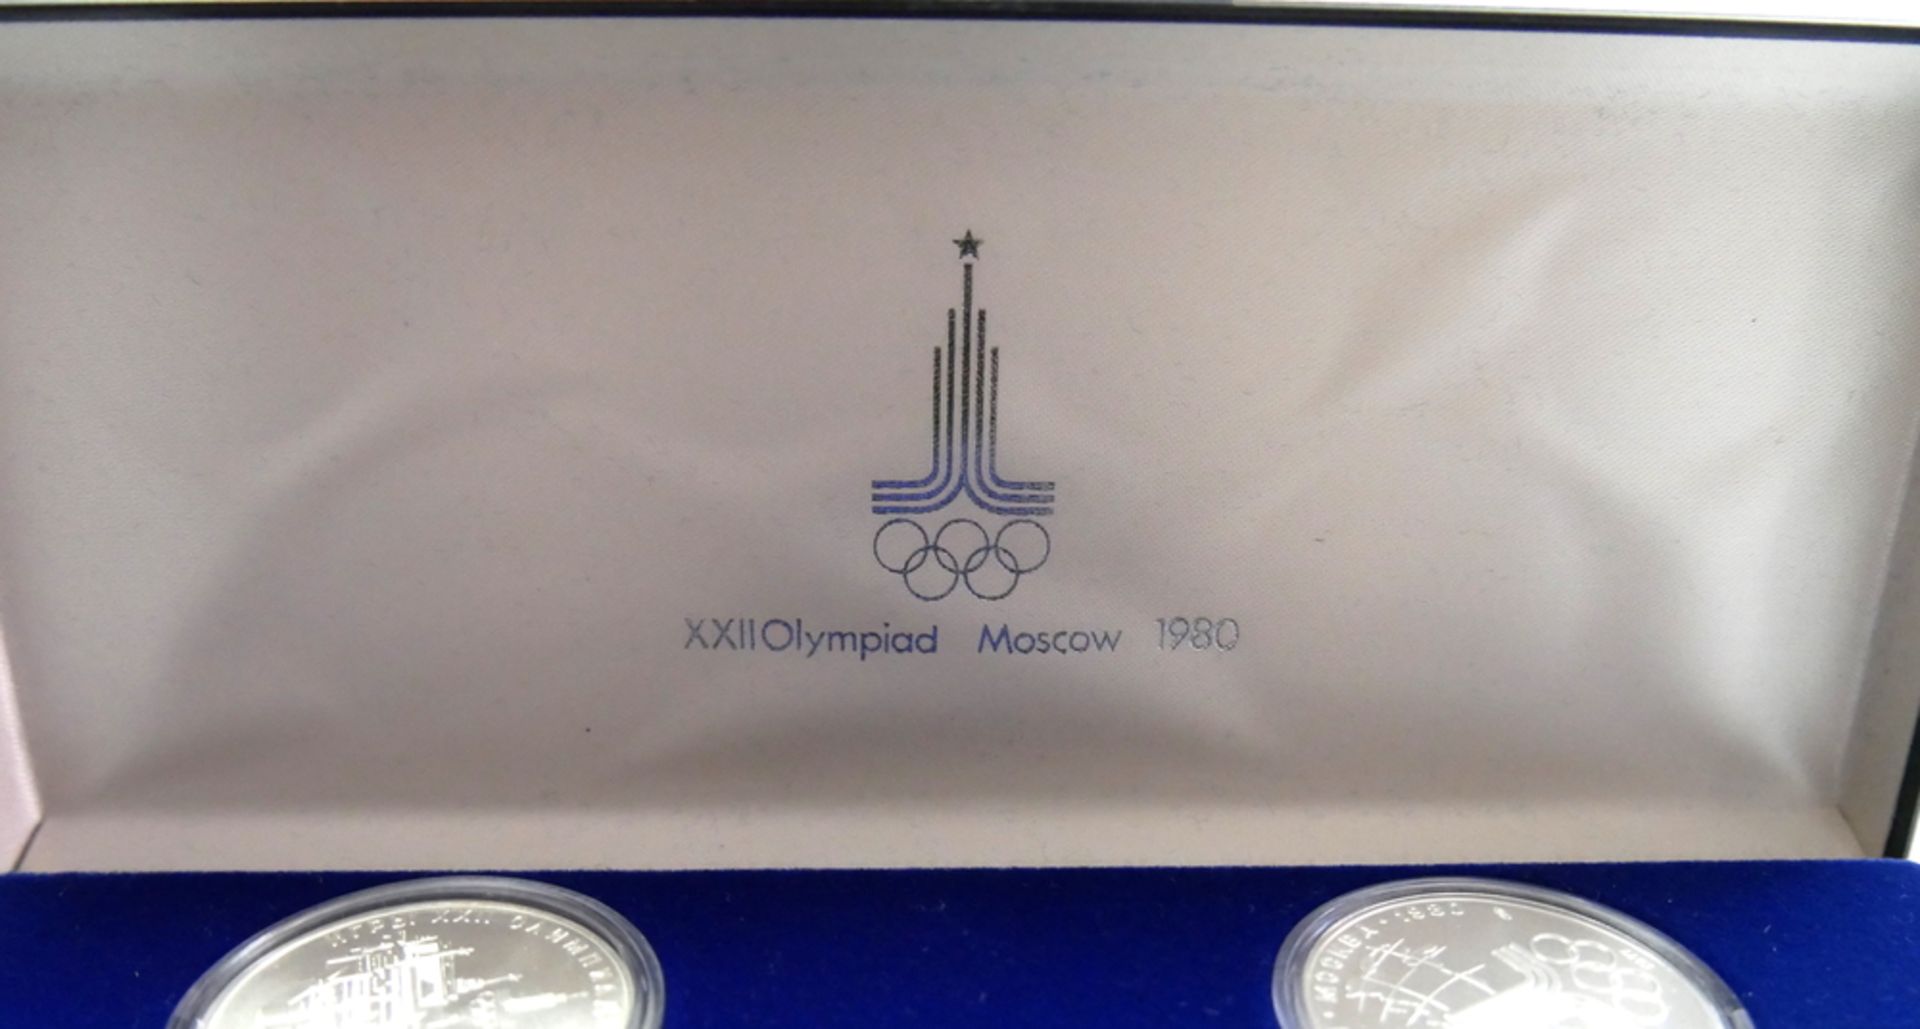 Sowjetunion, Olympia Münzsatz Moskau 1980. Silbersatz: 2x 10 Rubel, 4x 5 Rubel. In Original - Bild 2 aus 2